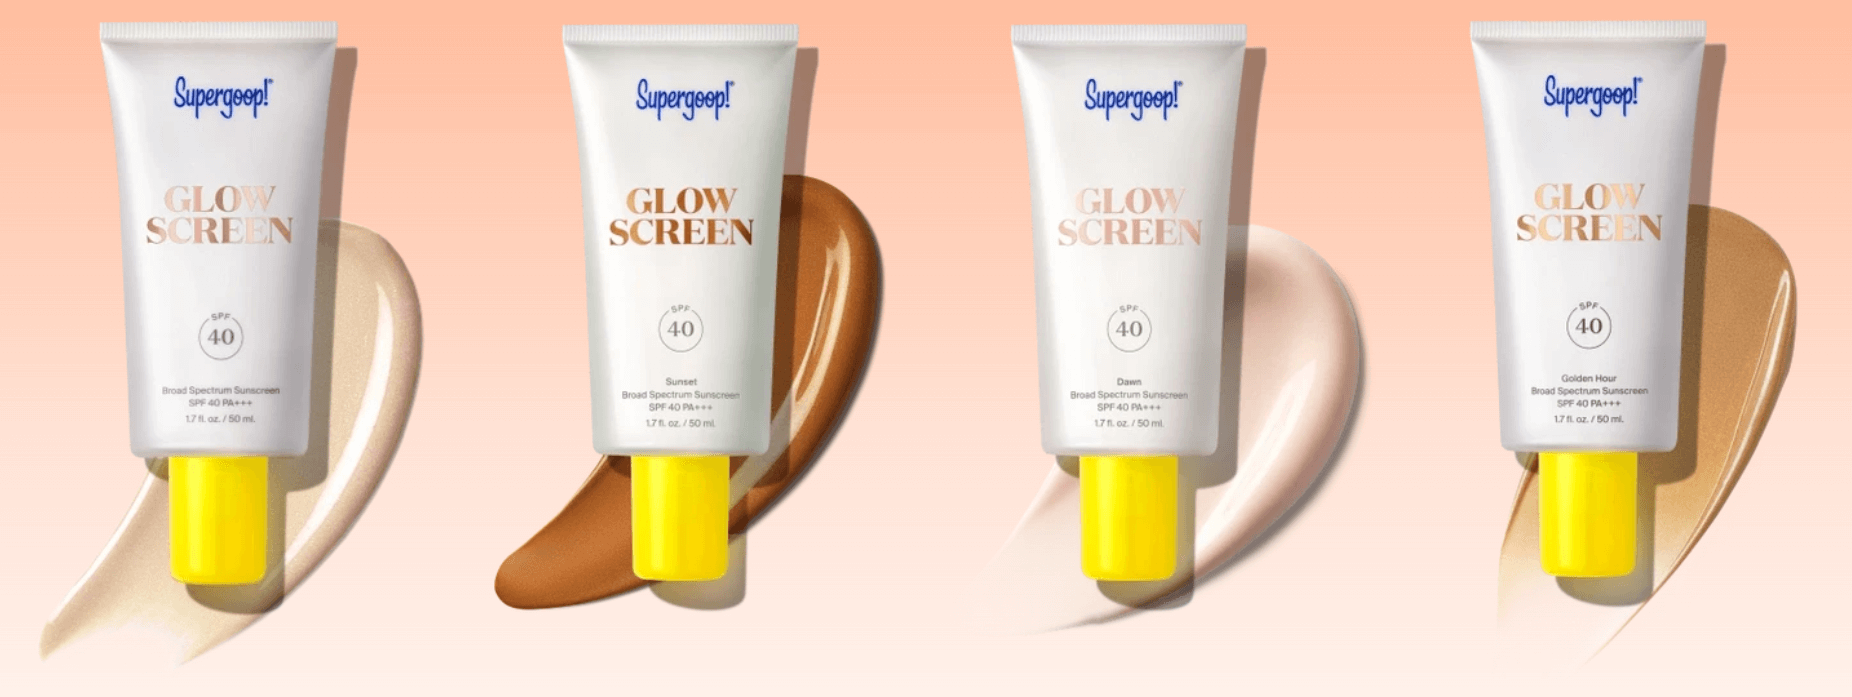 Image from Supergoop! website of Supergoop! sunscreens